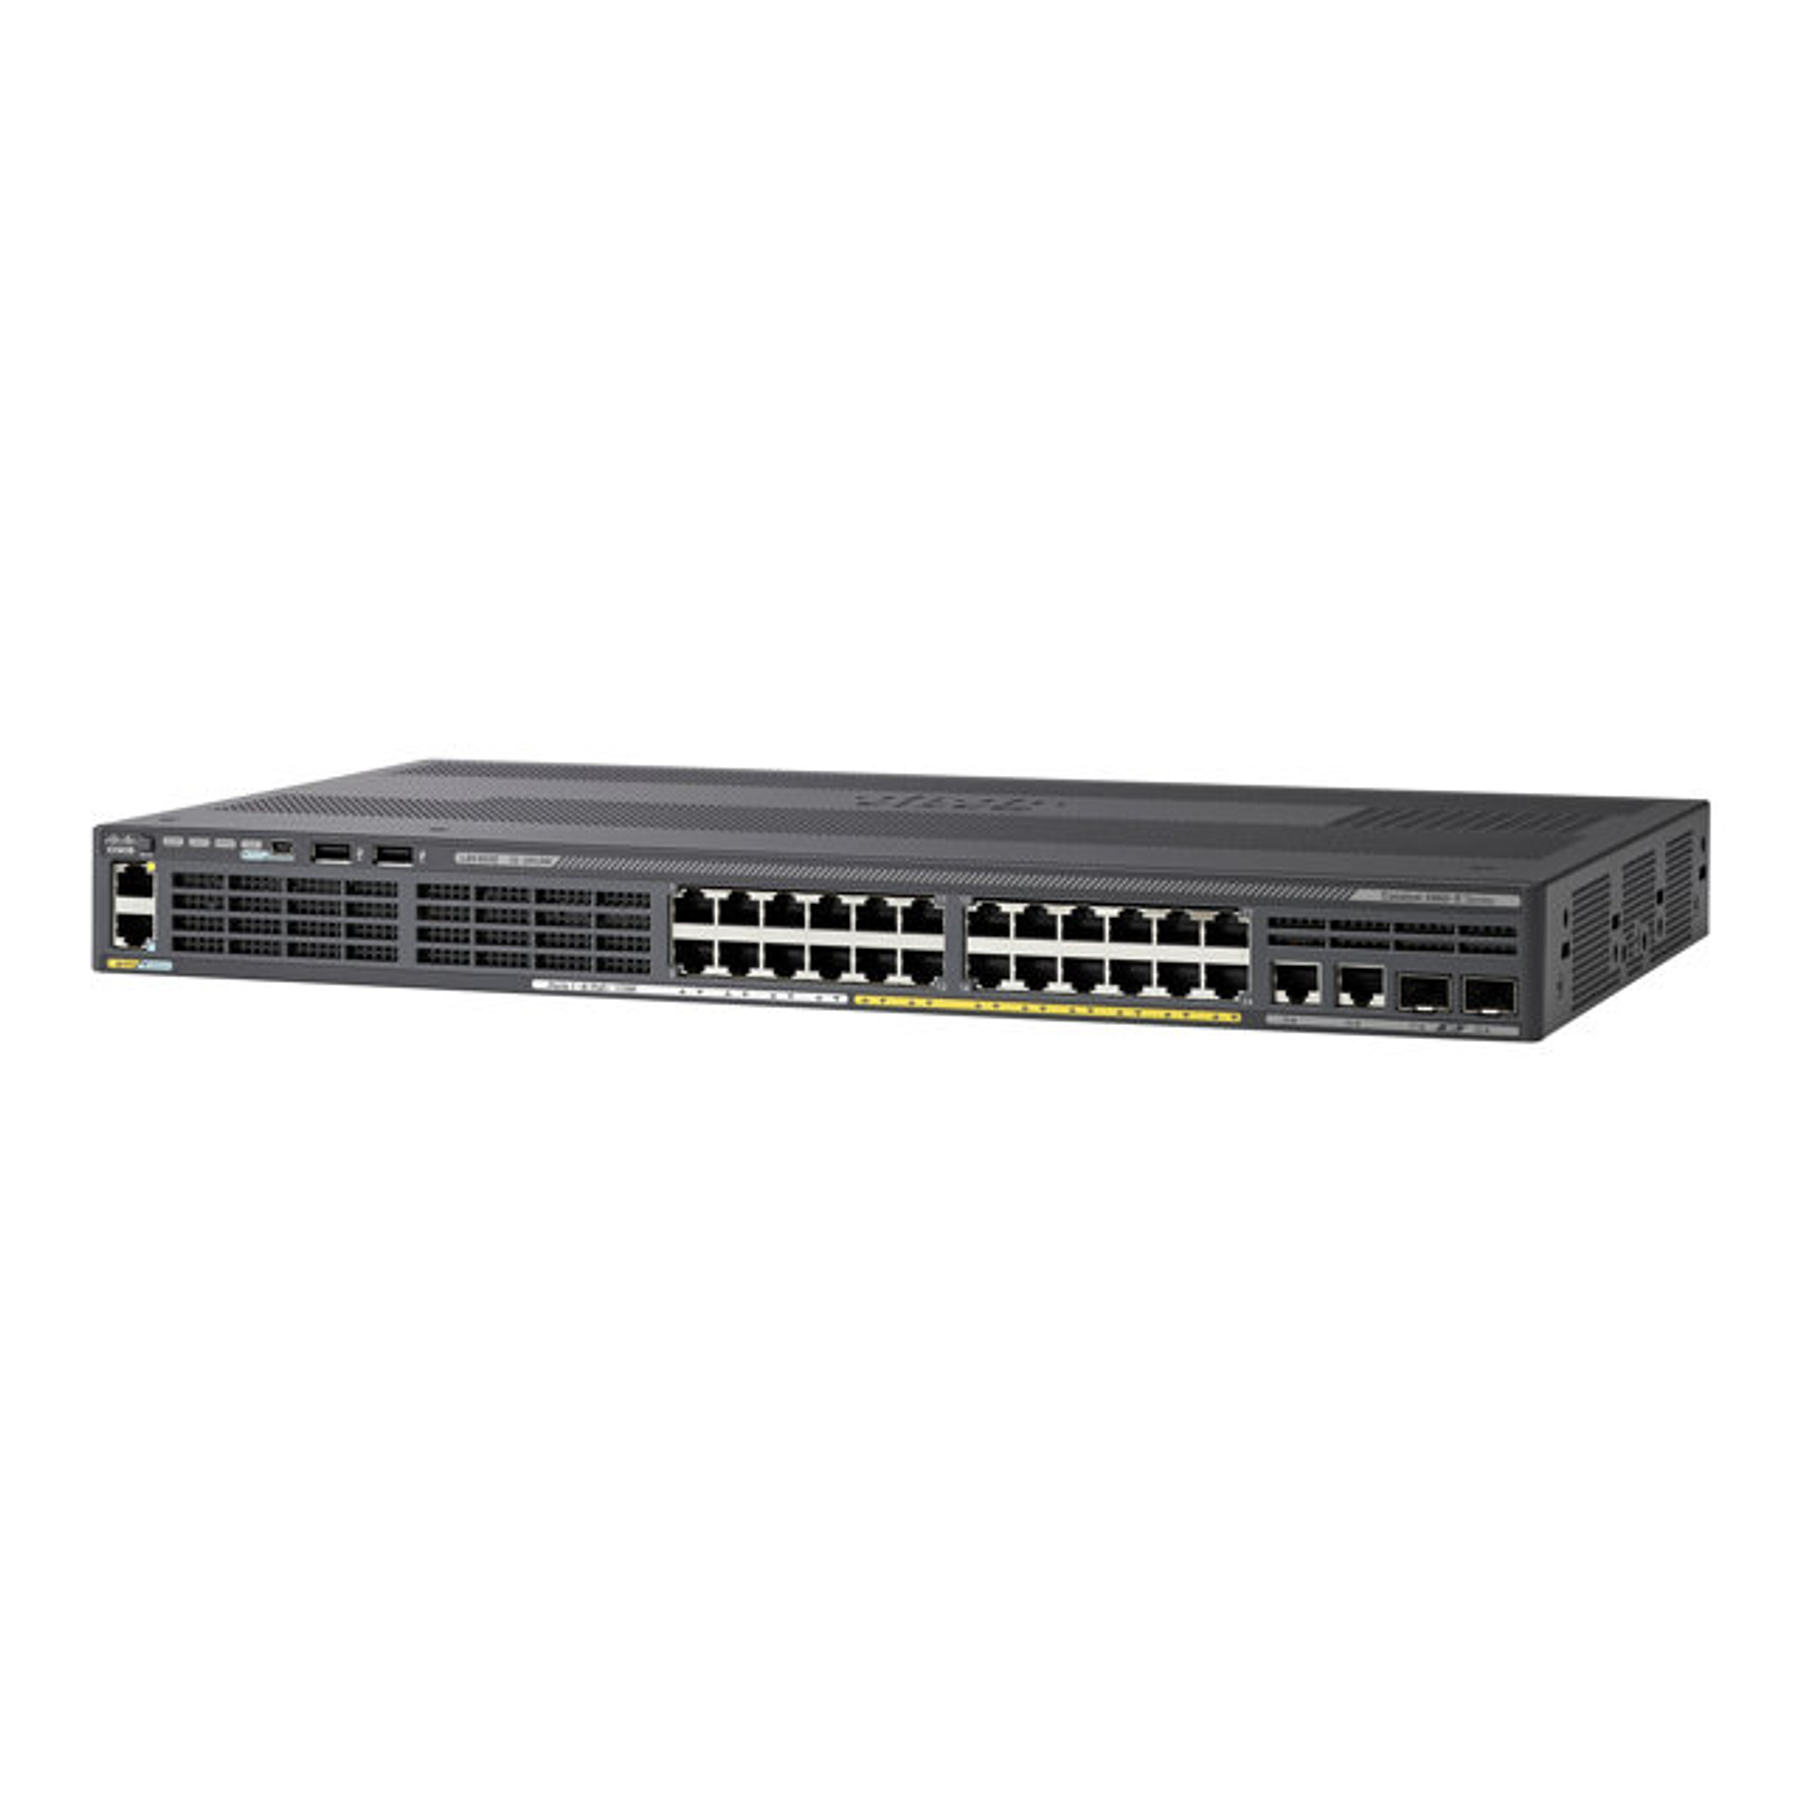 Cisco Catalyst 2960-X 24p 2 SFP Lan Lite